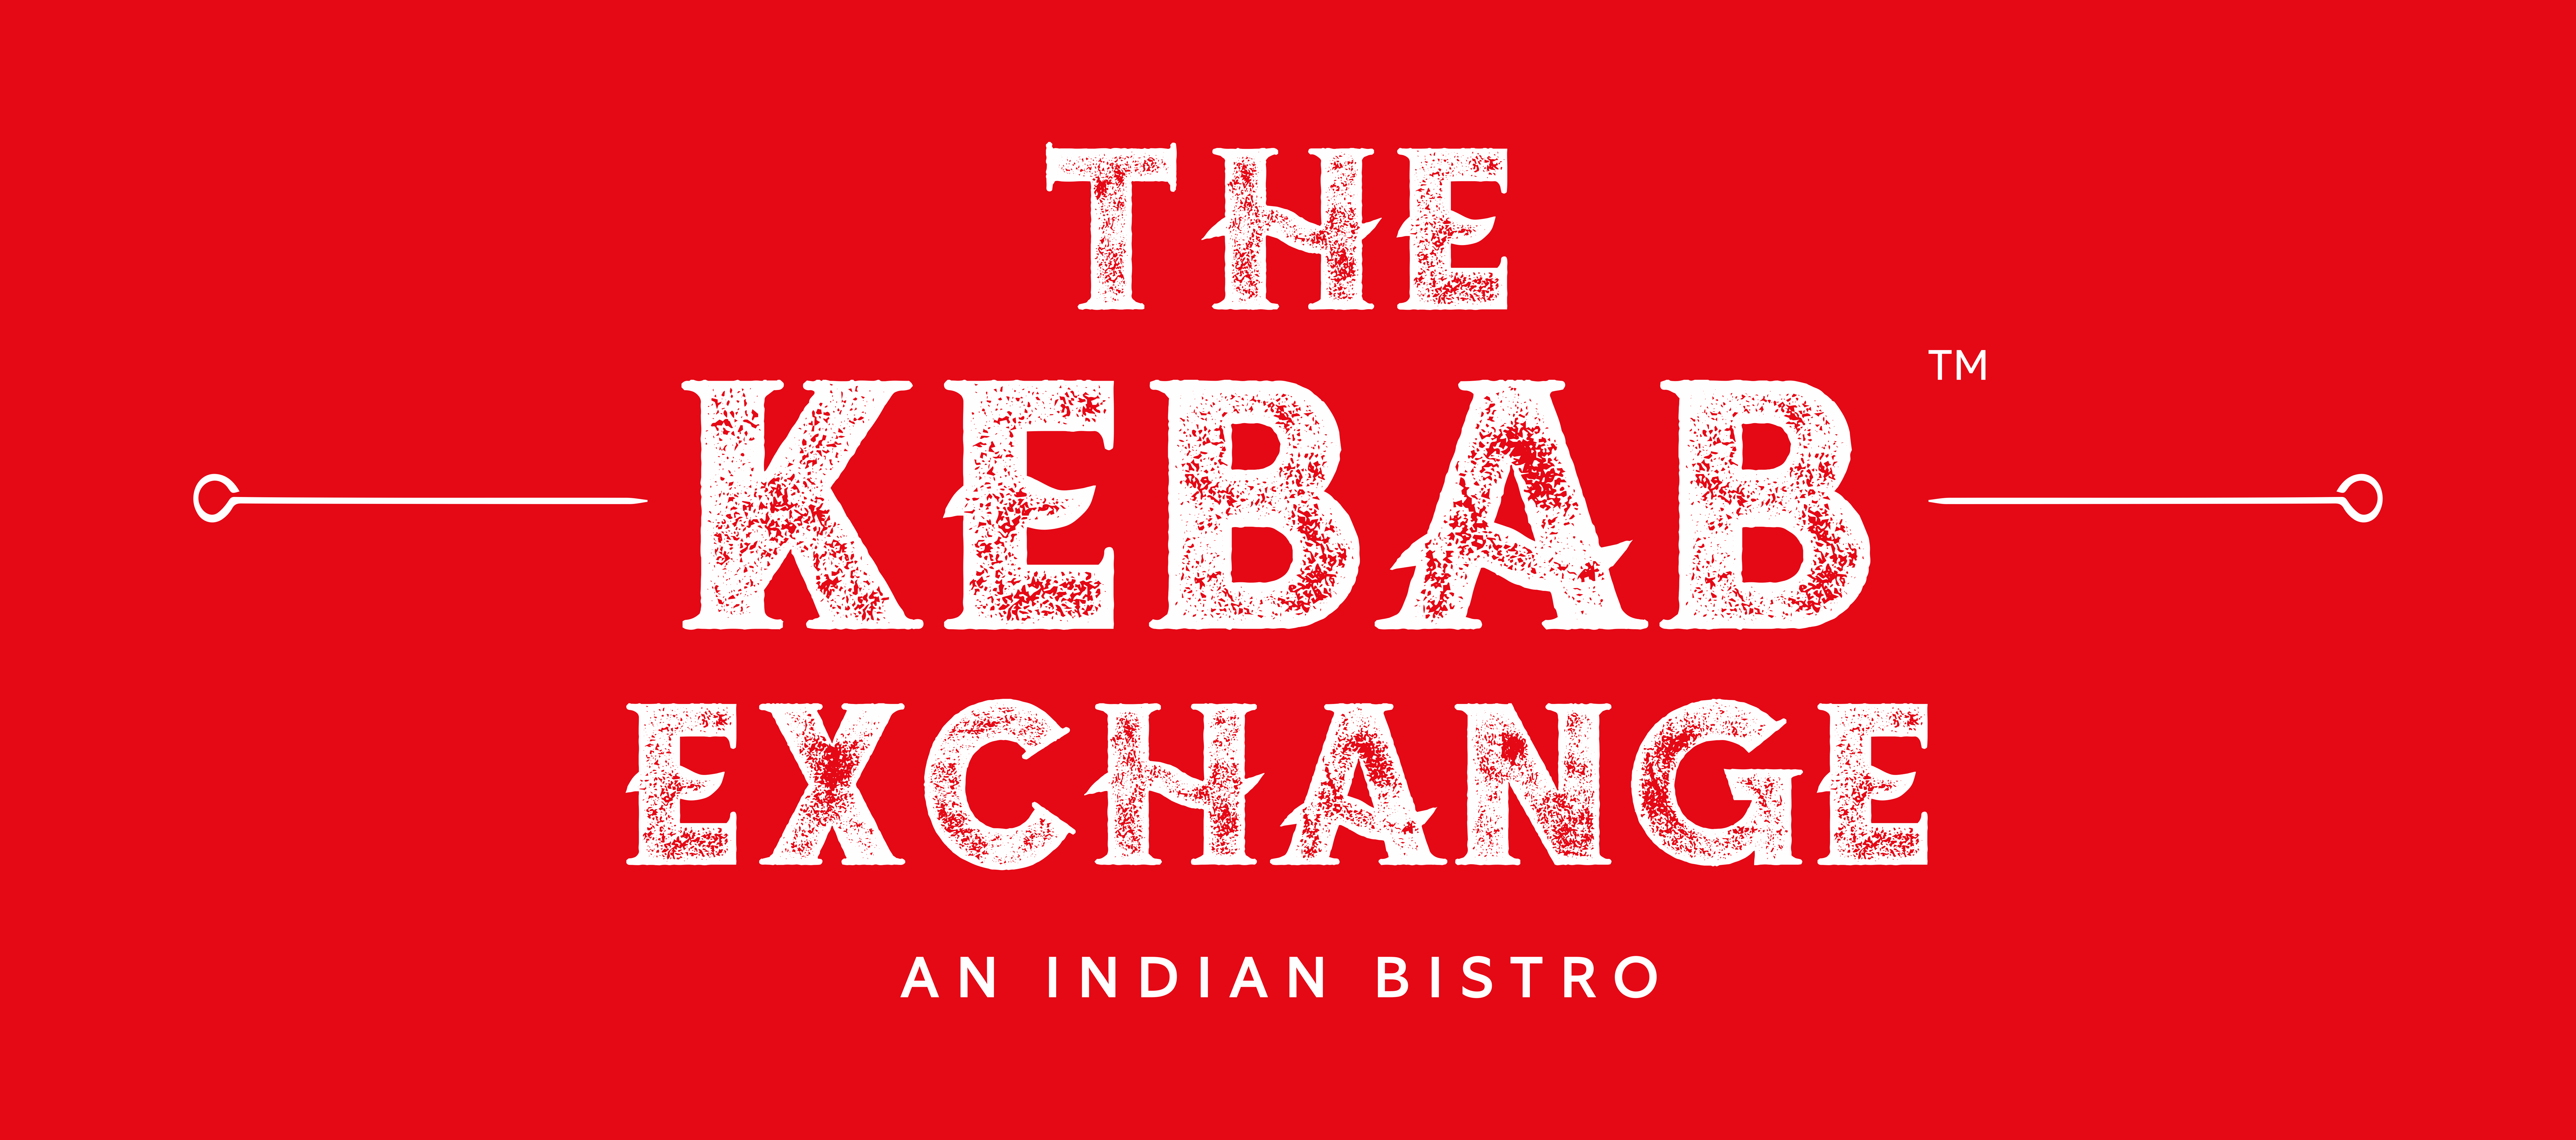 The Kebab Exchange